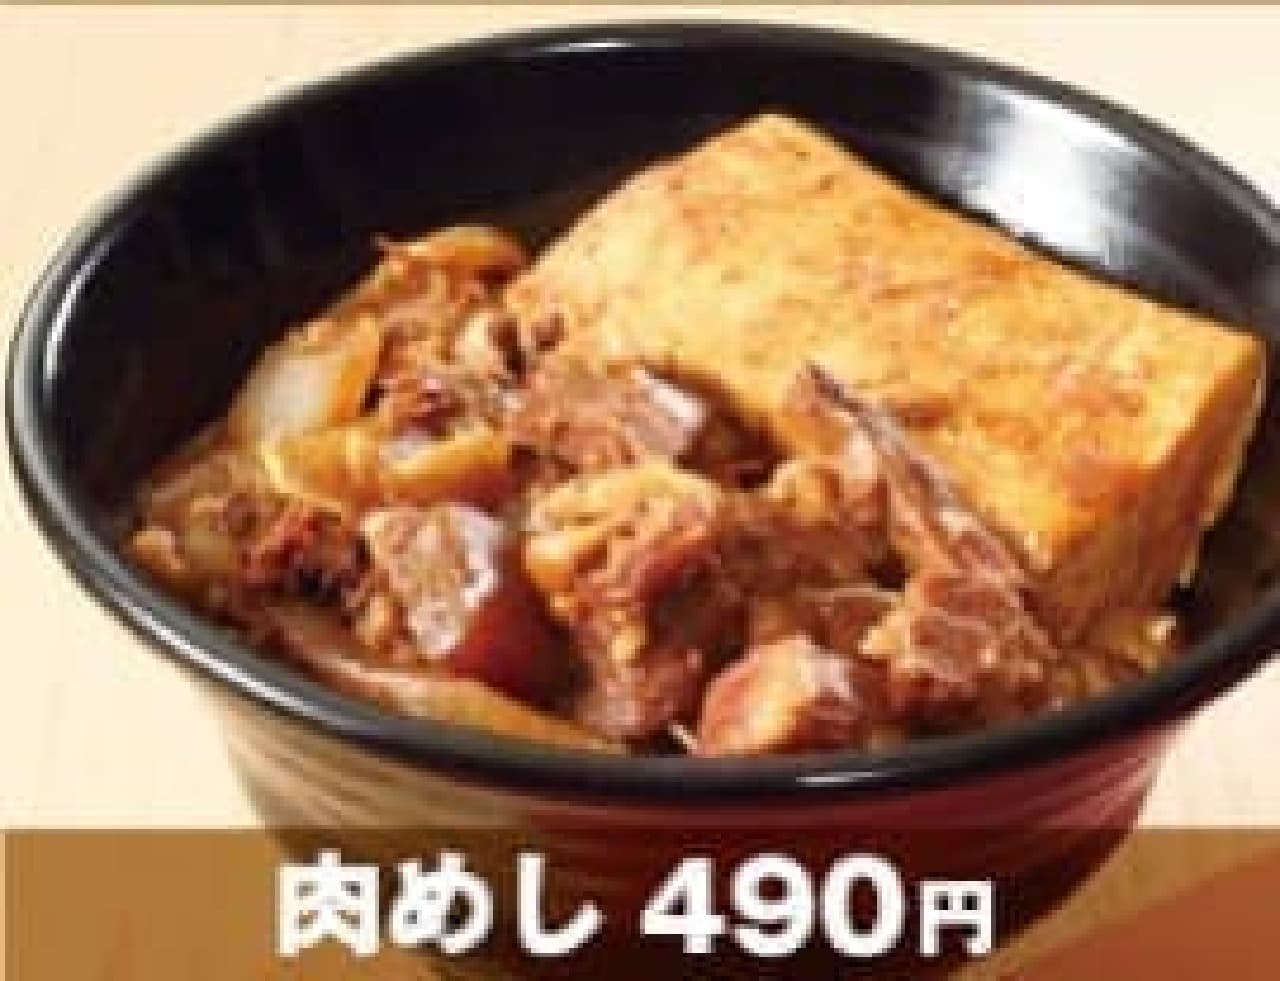 Reference: Okamuraya's signature menu "Meat rice"